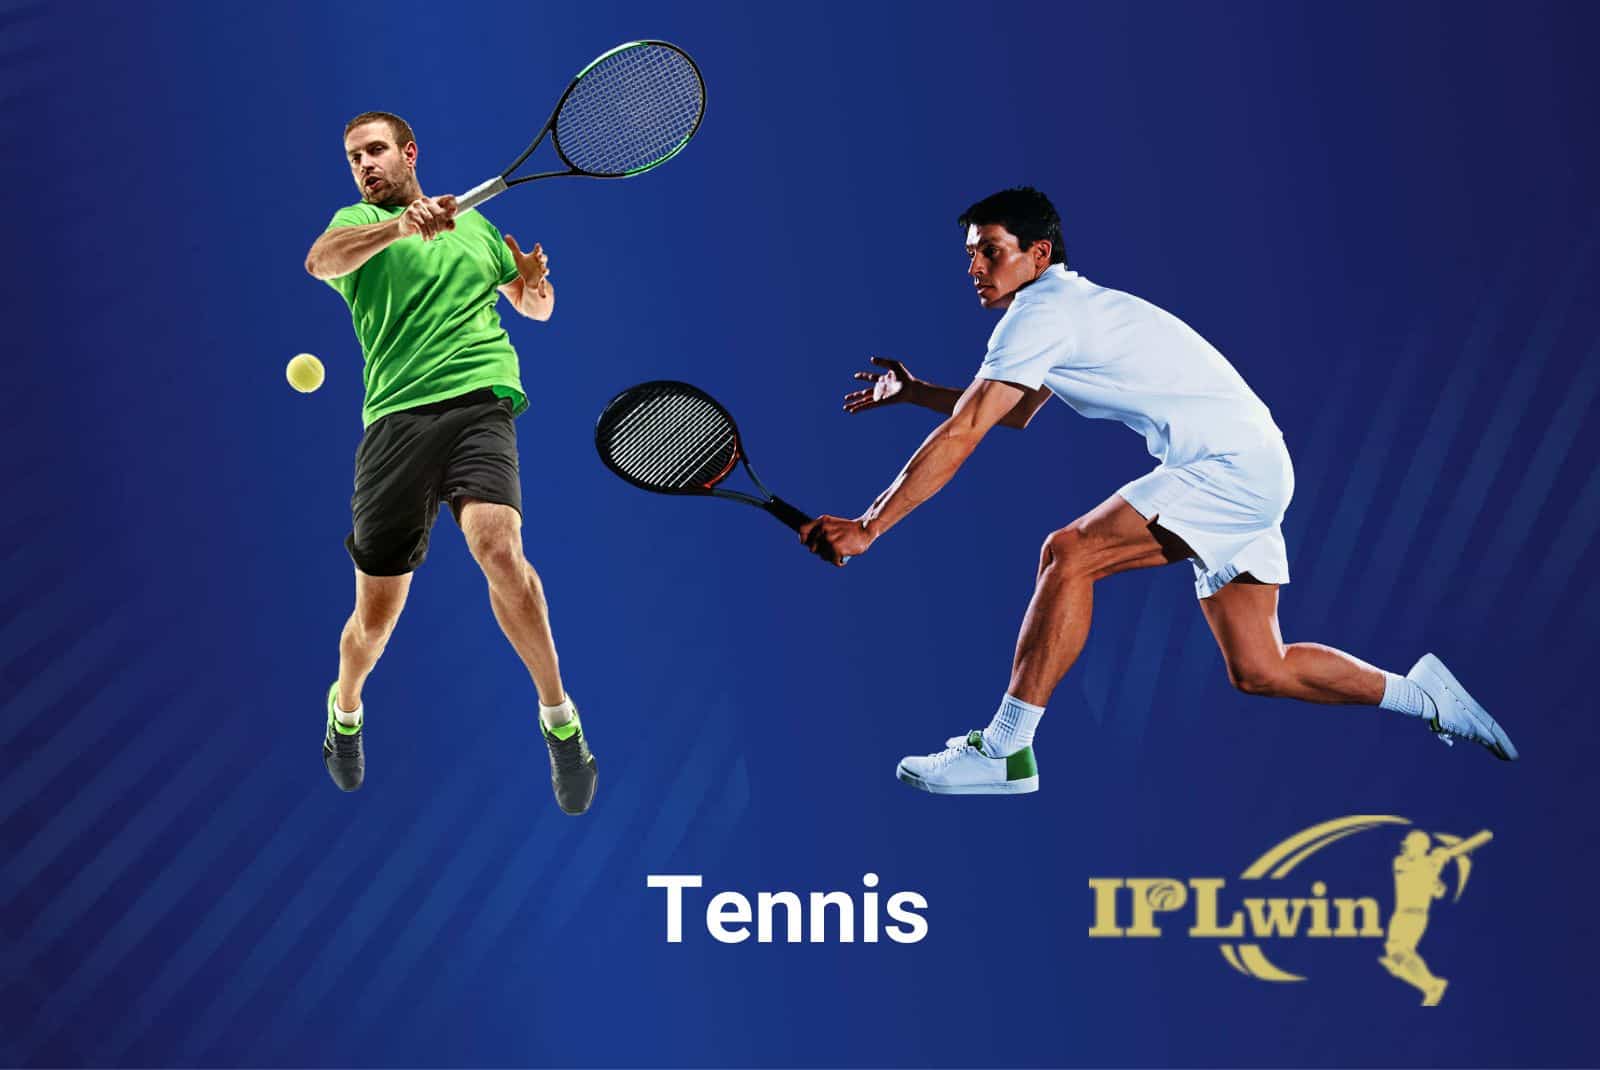 IPLwin India tennis betting guide